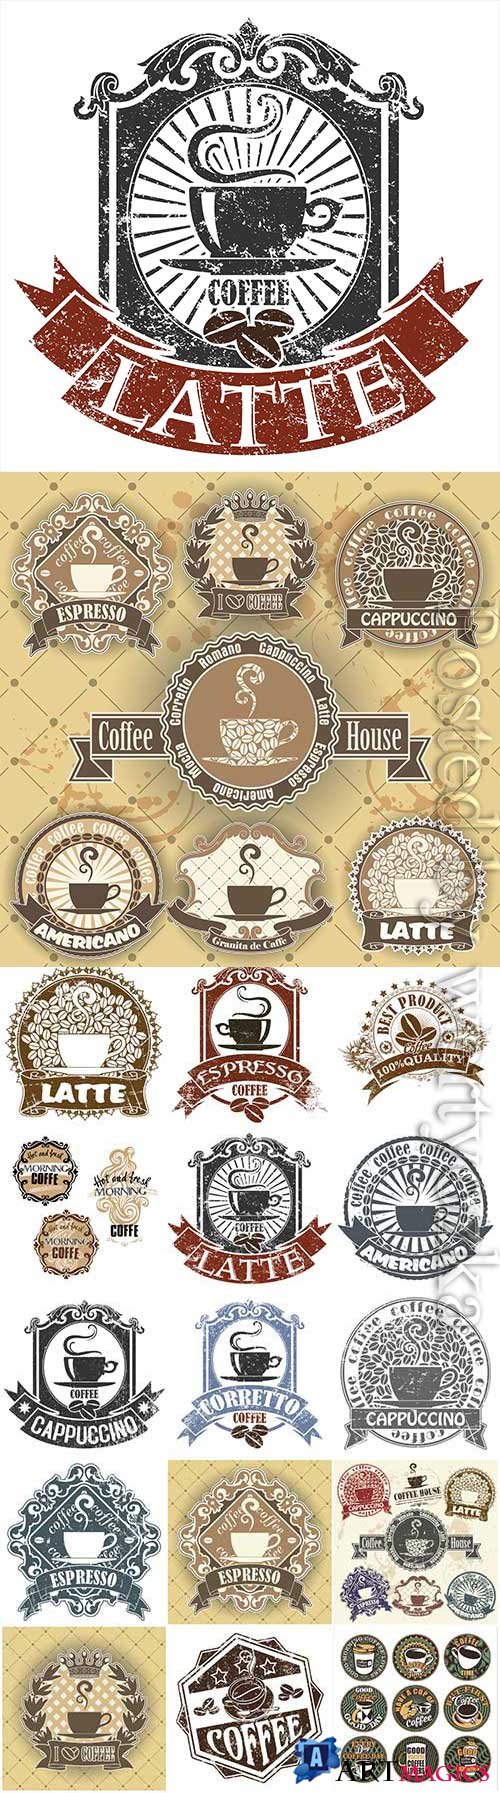 Retro coffee labels in vector